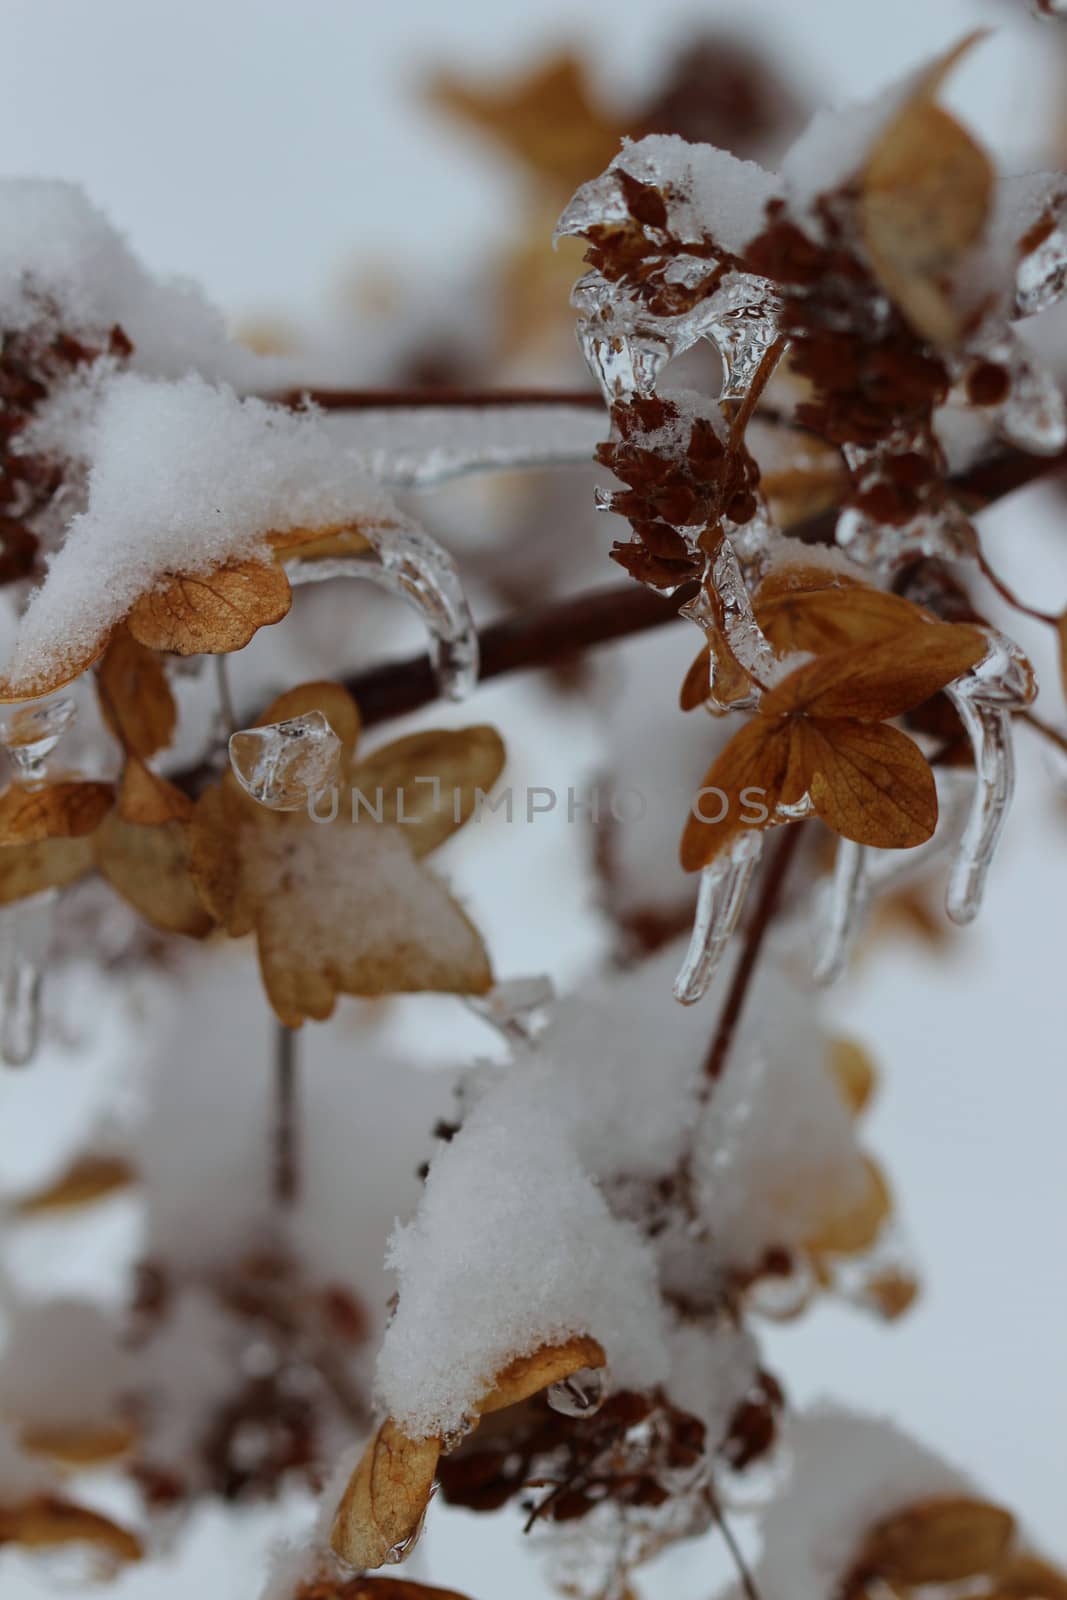 Frozen Seeds by Catmando